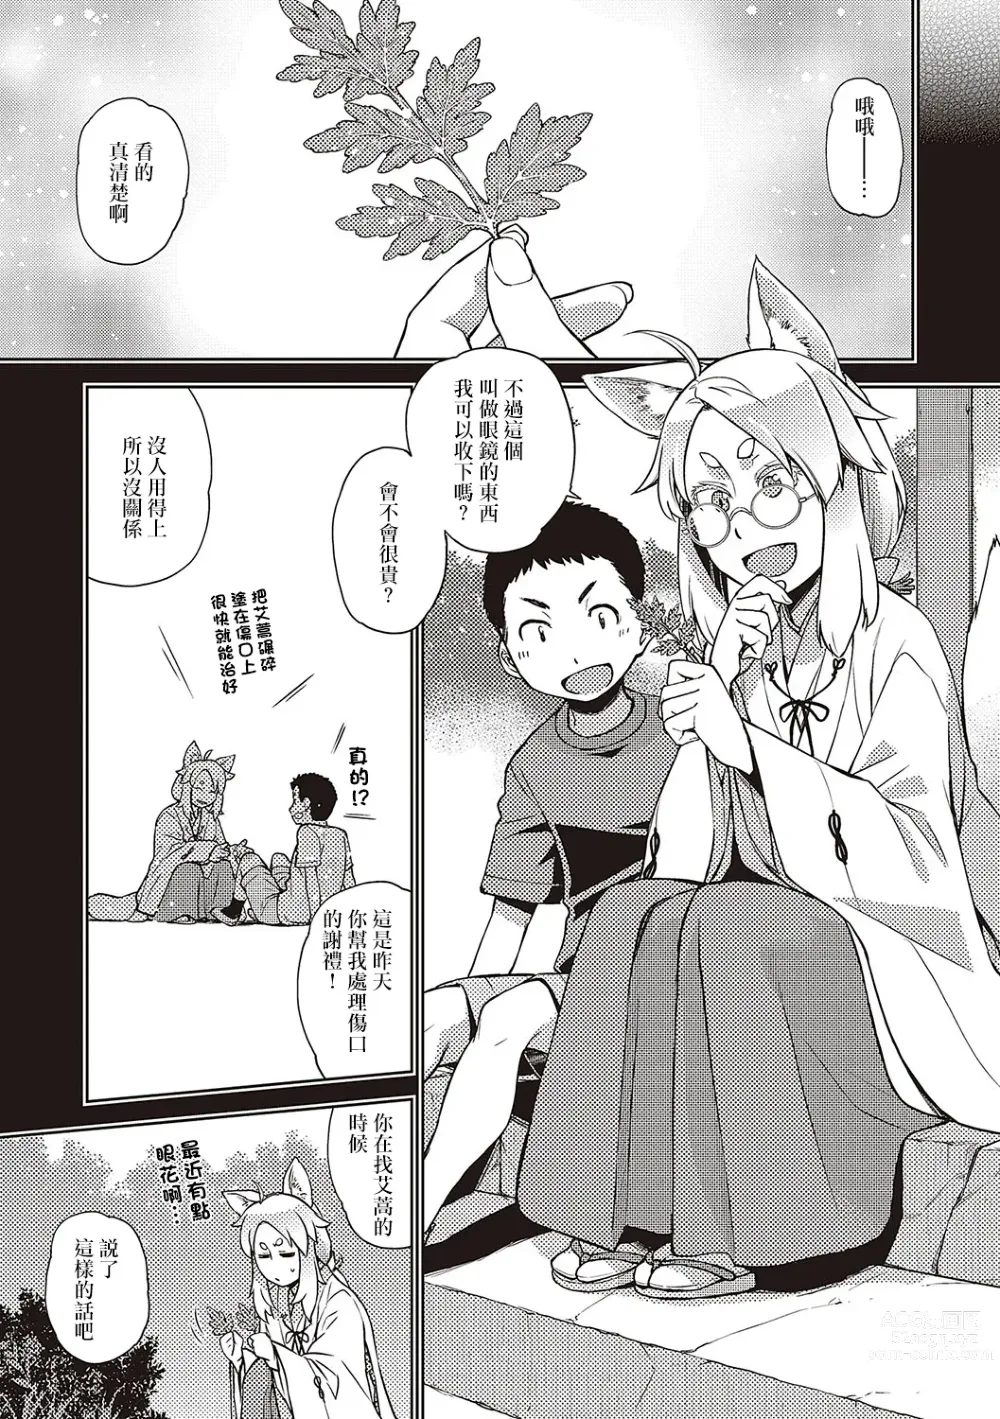 Page 5 of manga Mateba Megane no Kitsune Ari